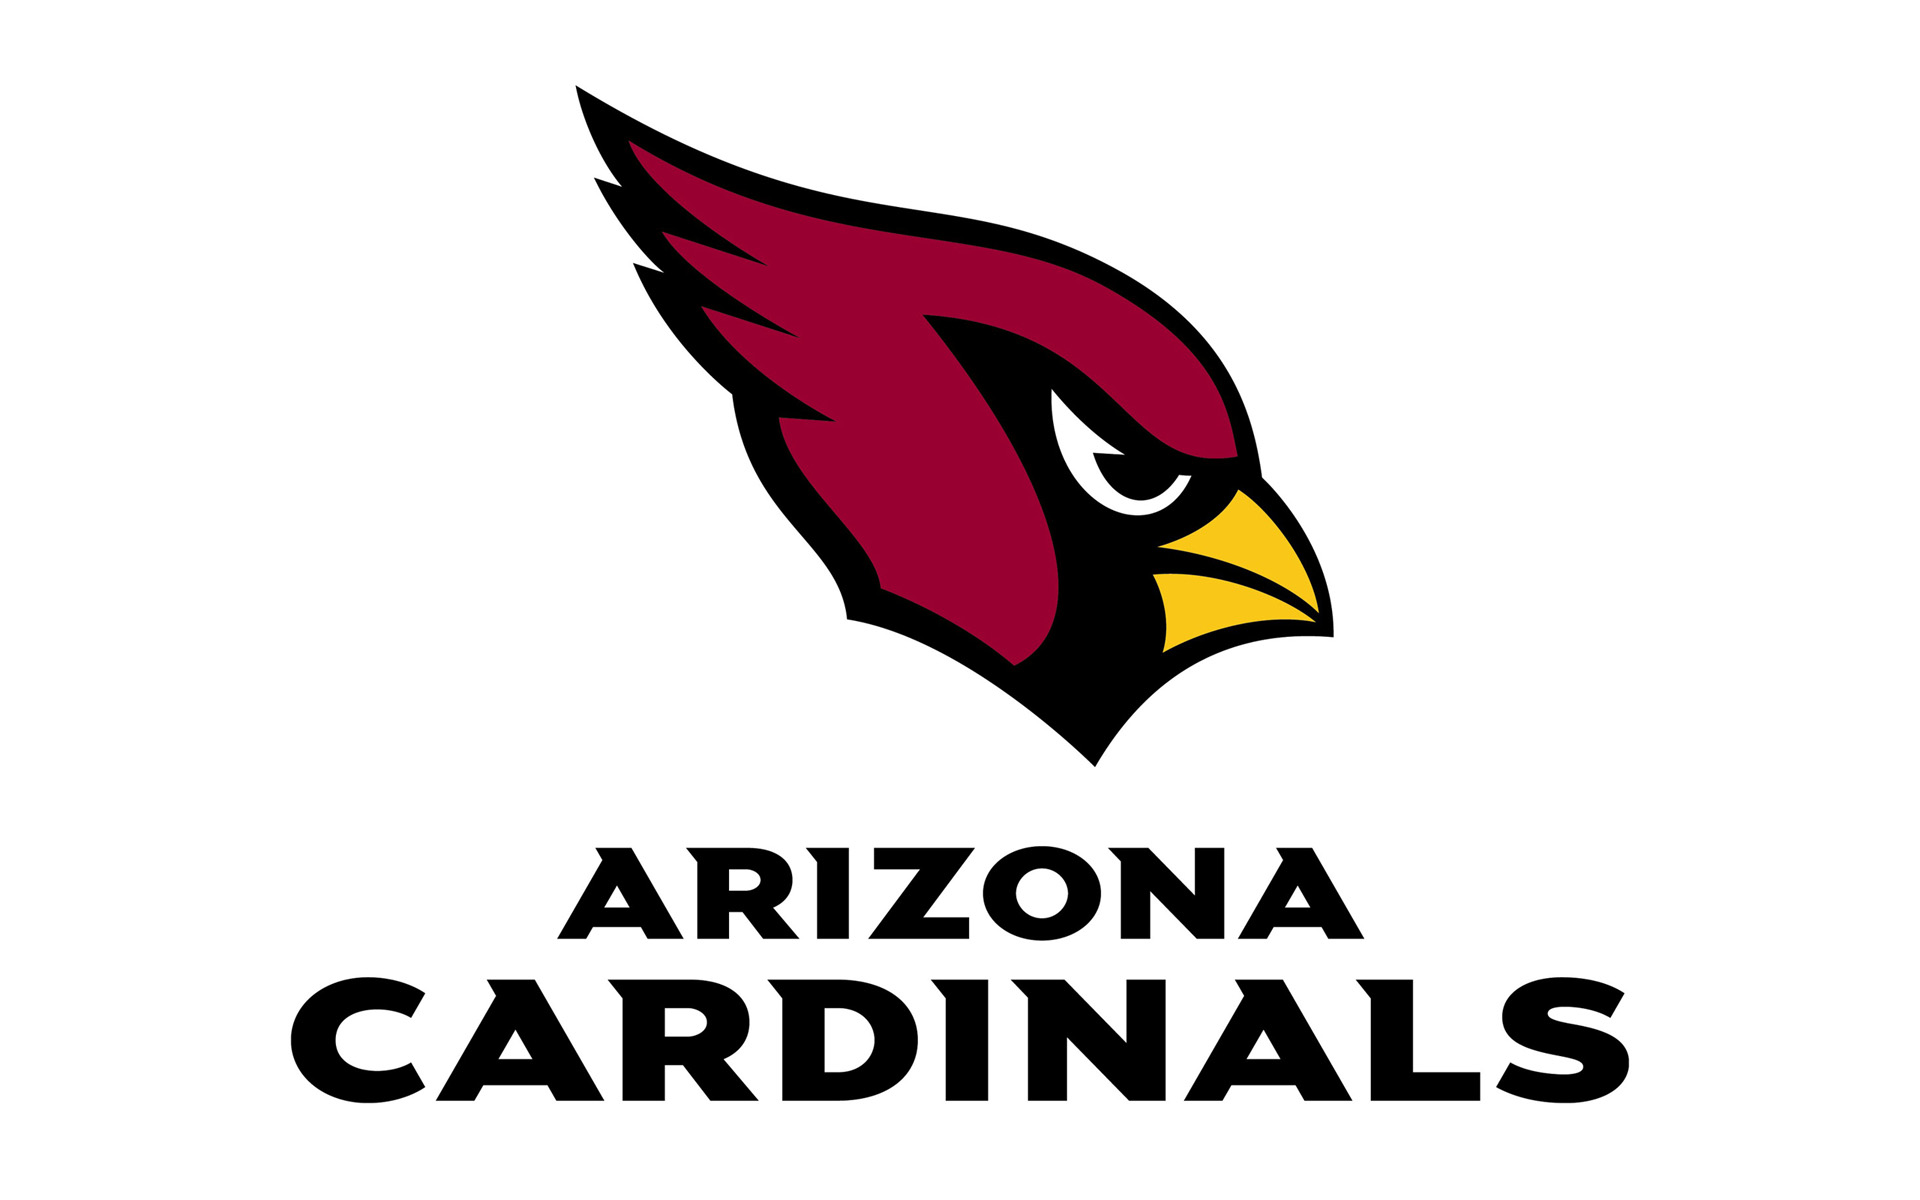 Arizona Cardinals Nfl Wide Image Most Polular